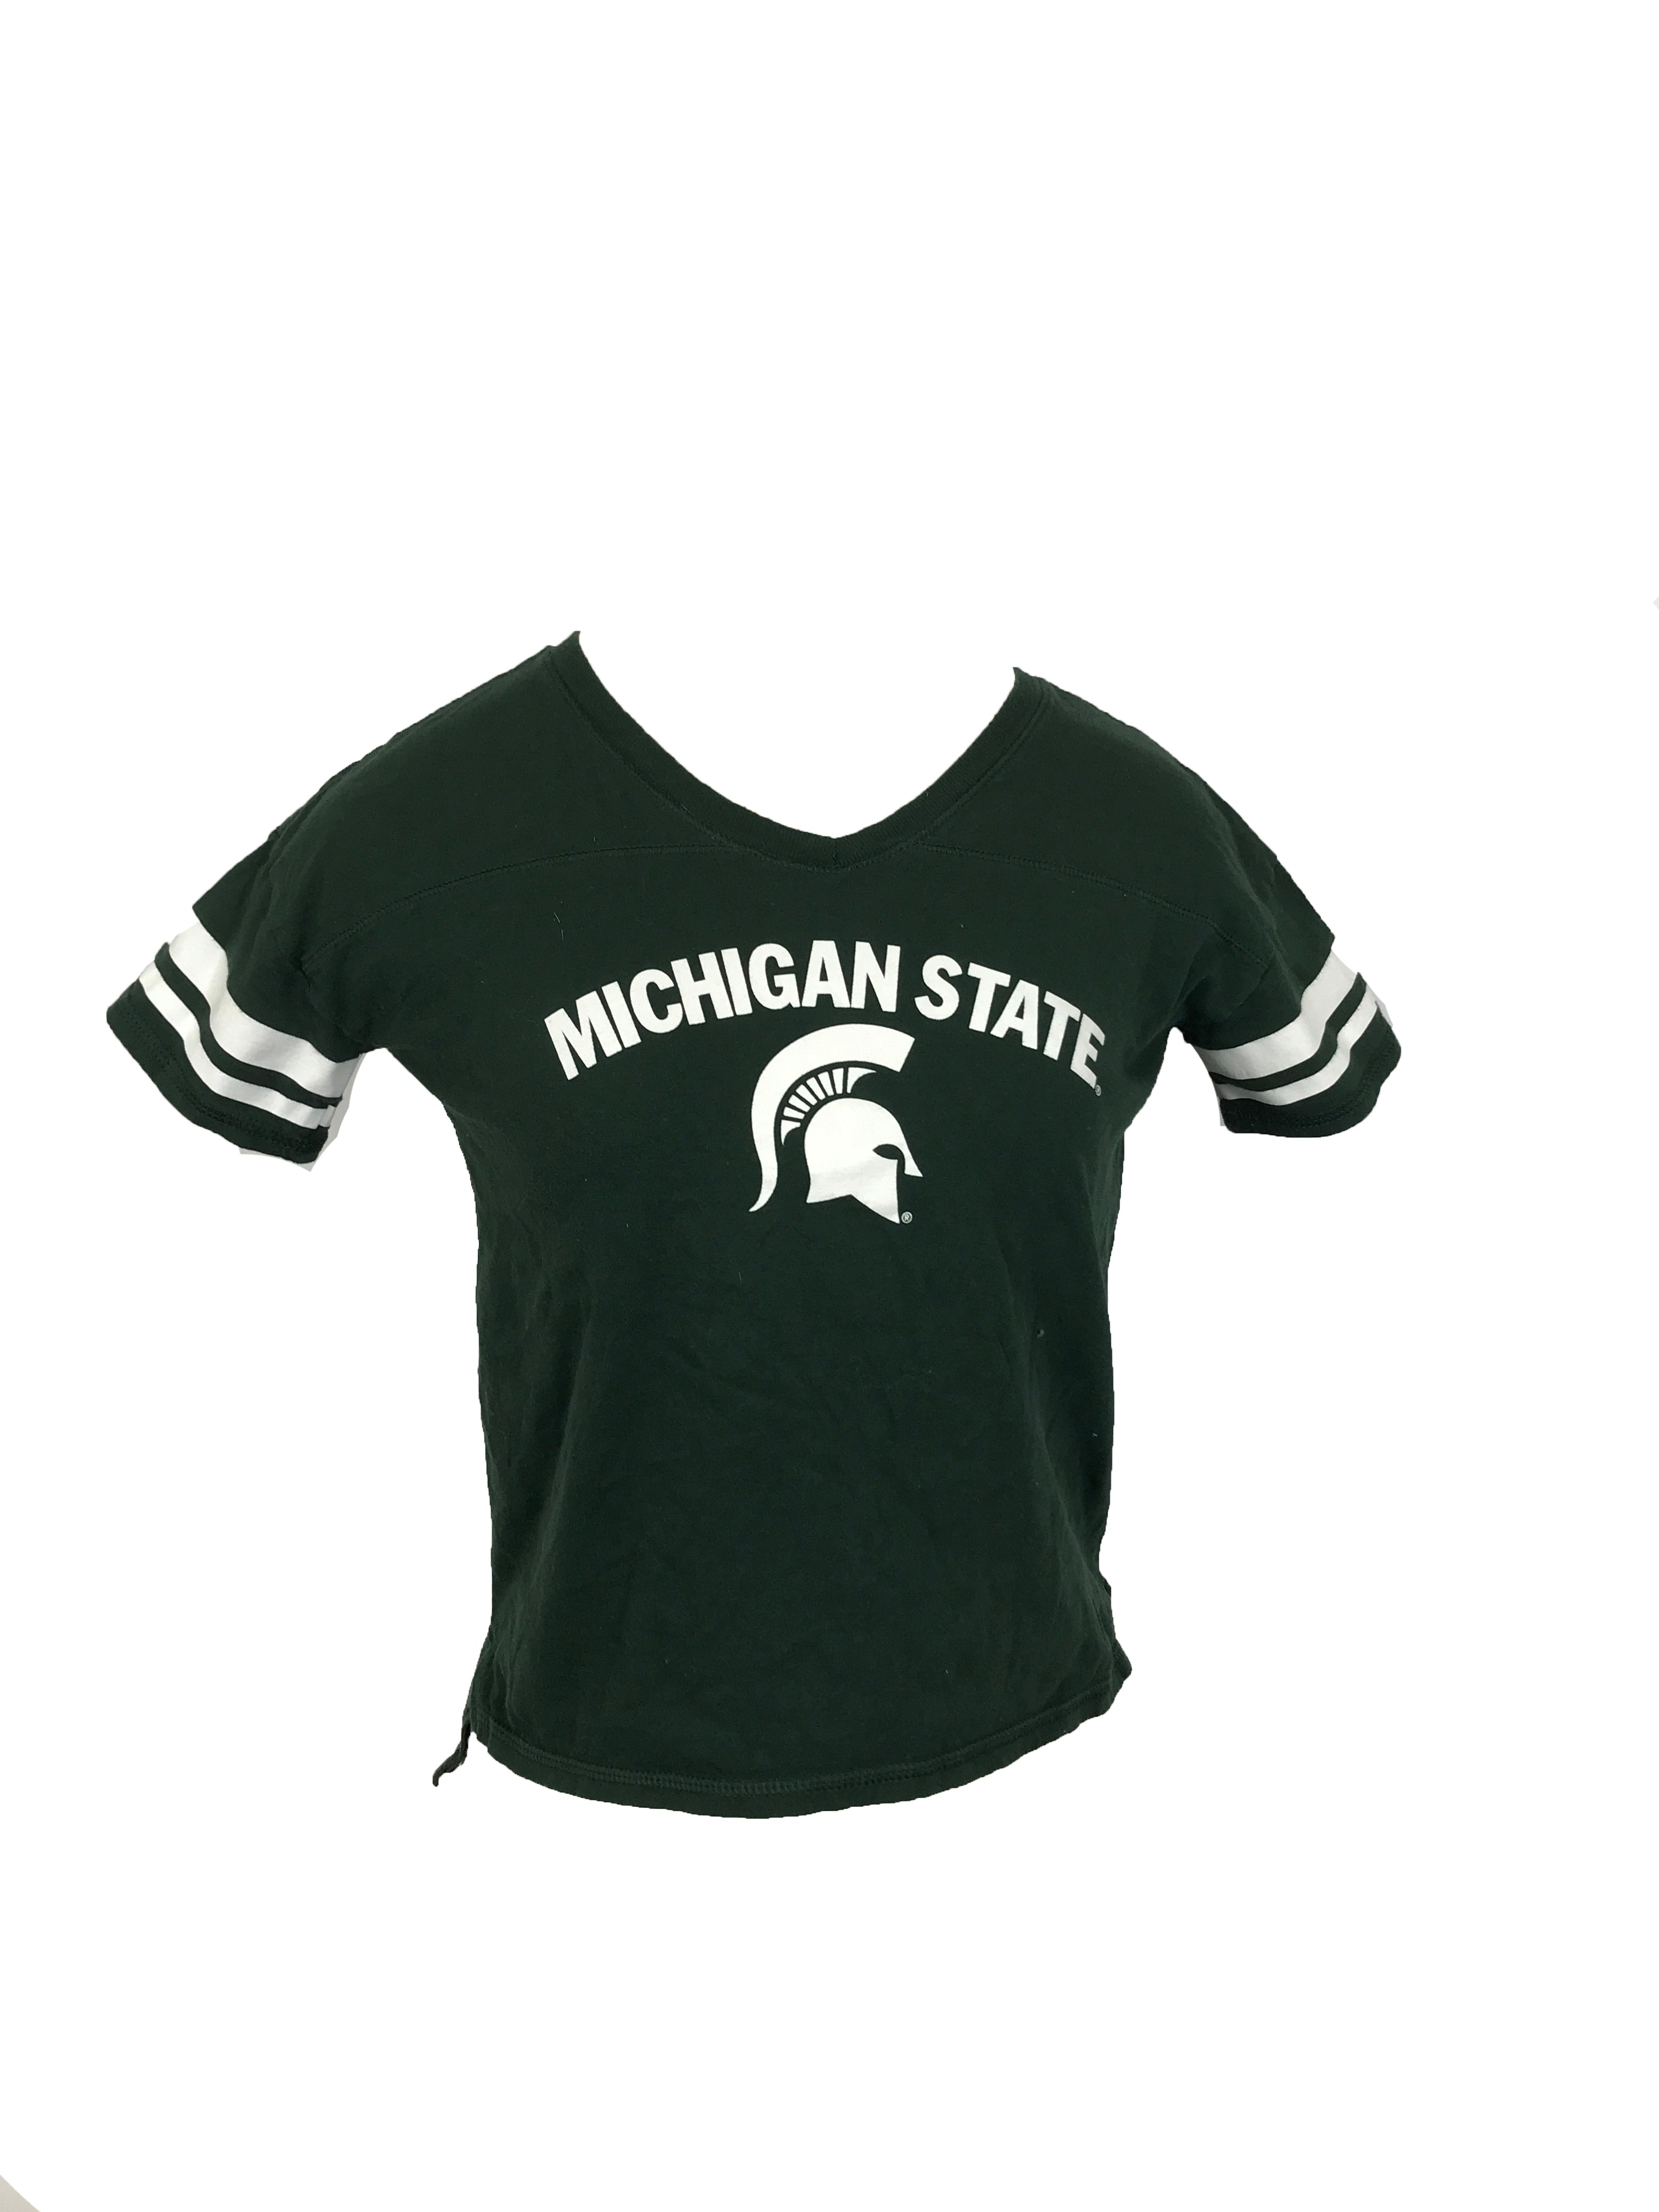 Green Michigan State T-Shirt Youth Large